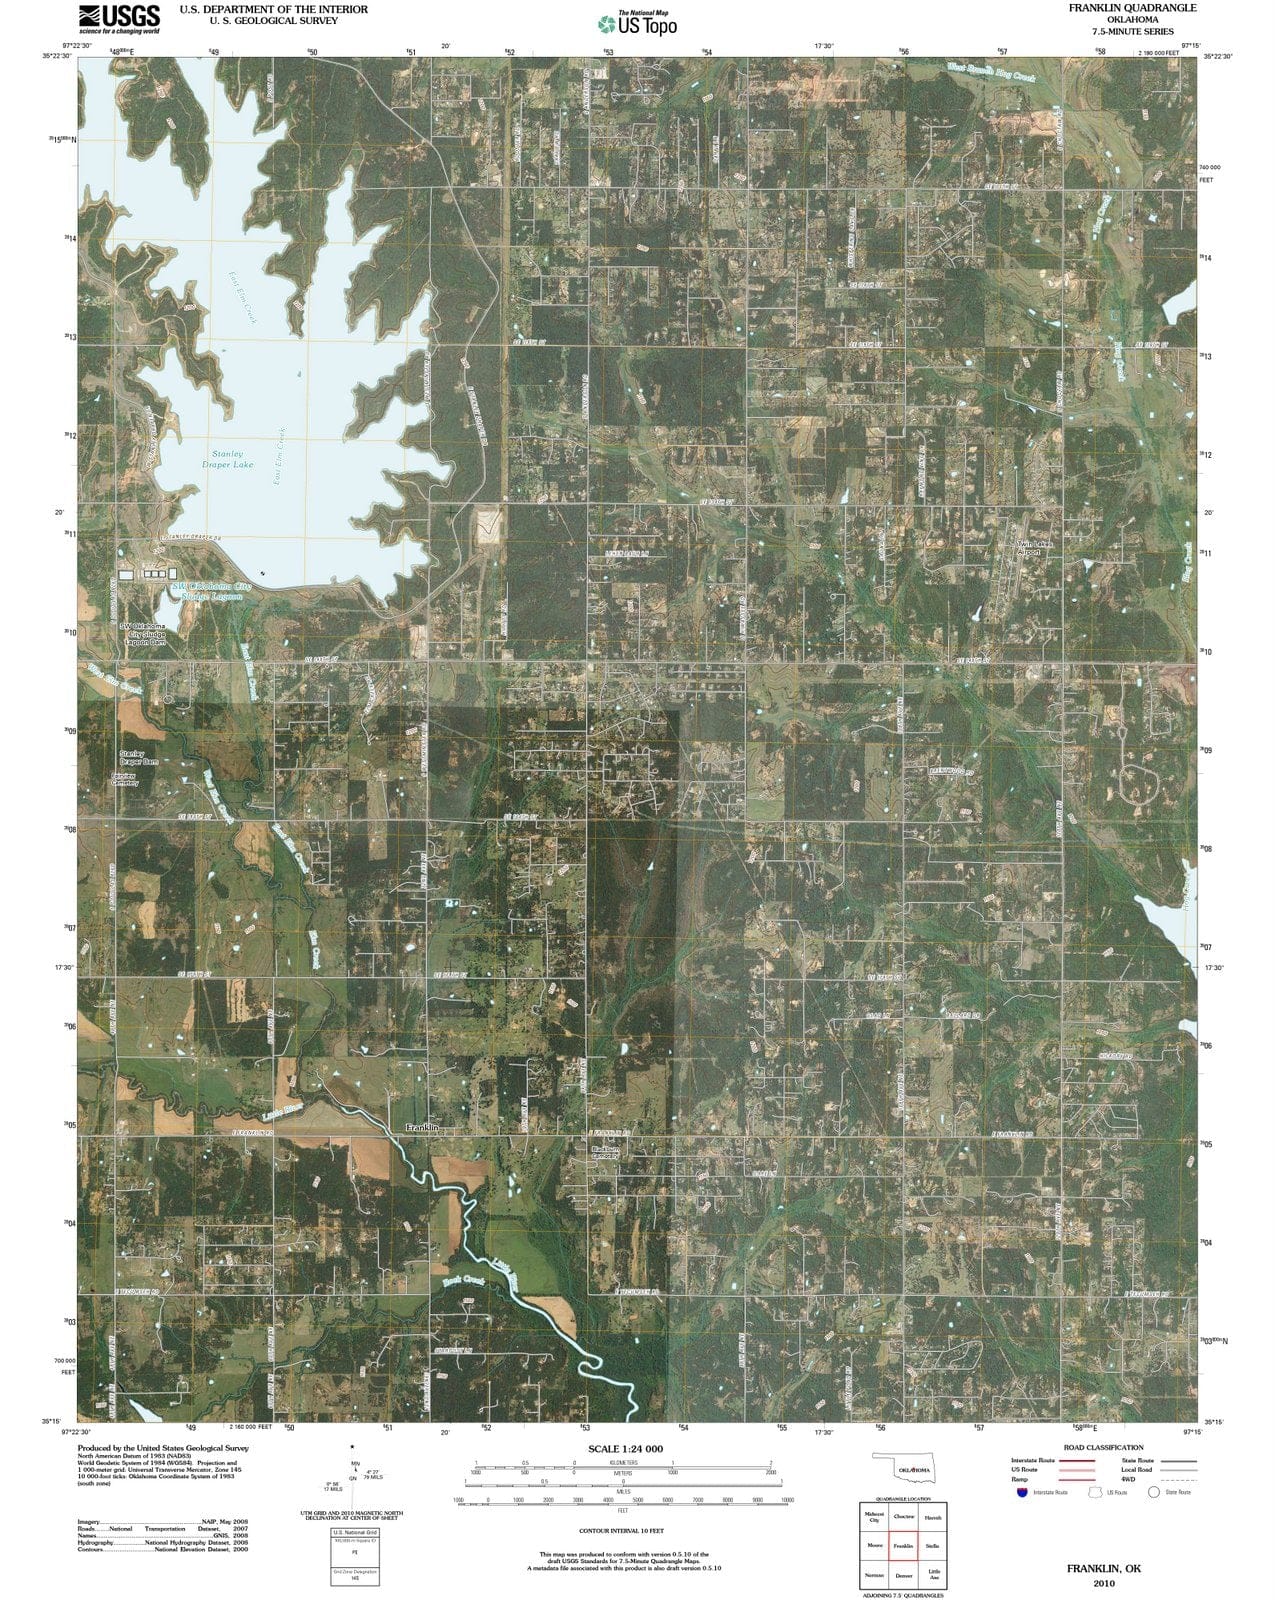 2010 Franklin, OK - Oklahoma - USGS Topographic Map